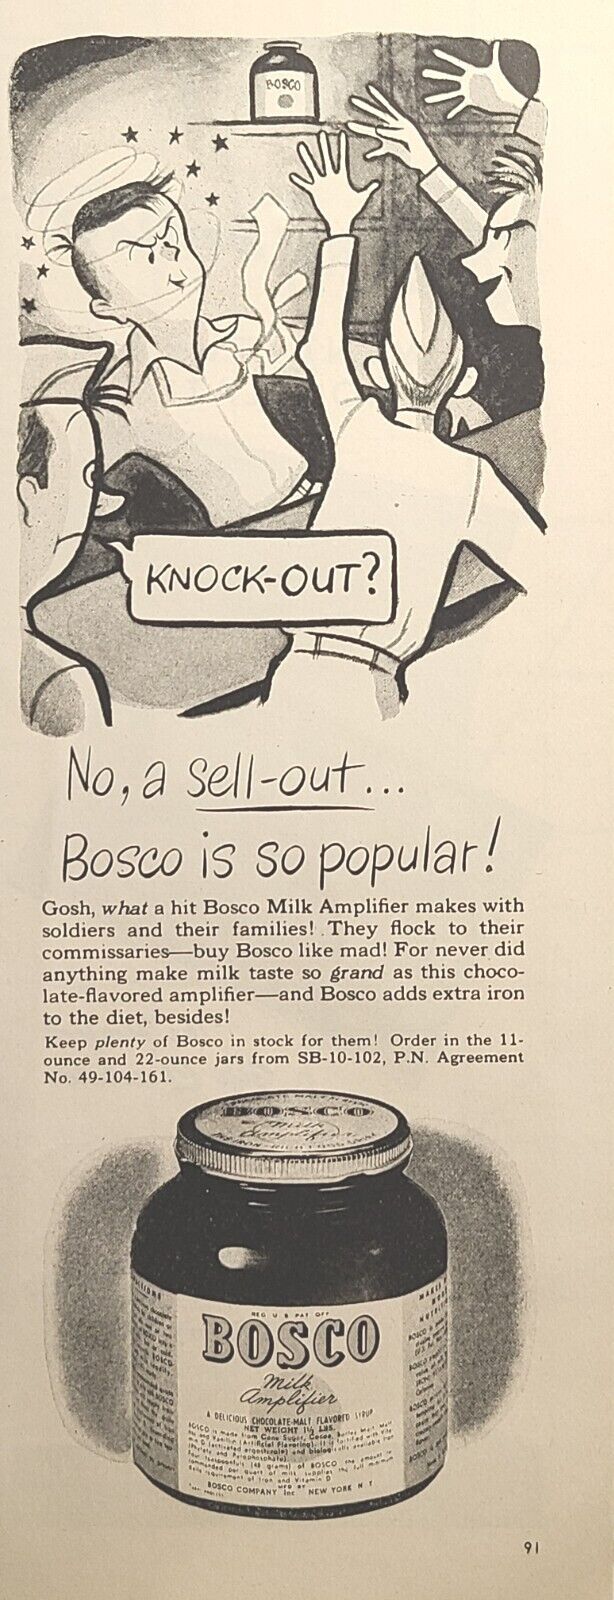 Bosco Chocolate Flavor Milk Amplifier Adds Iron Vintage Print Ad 1946